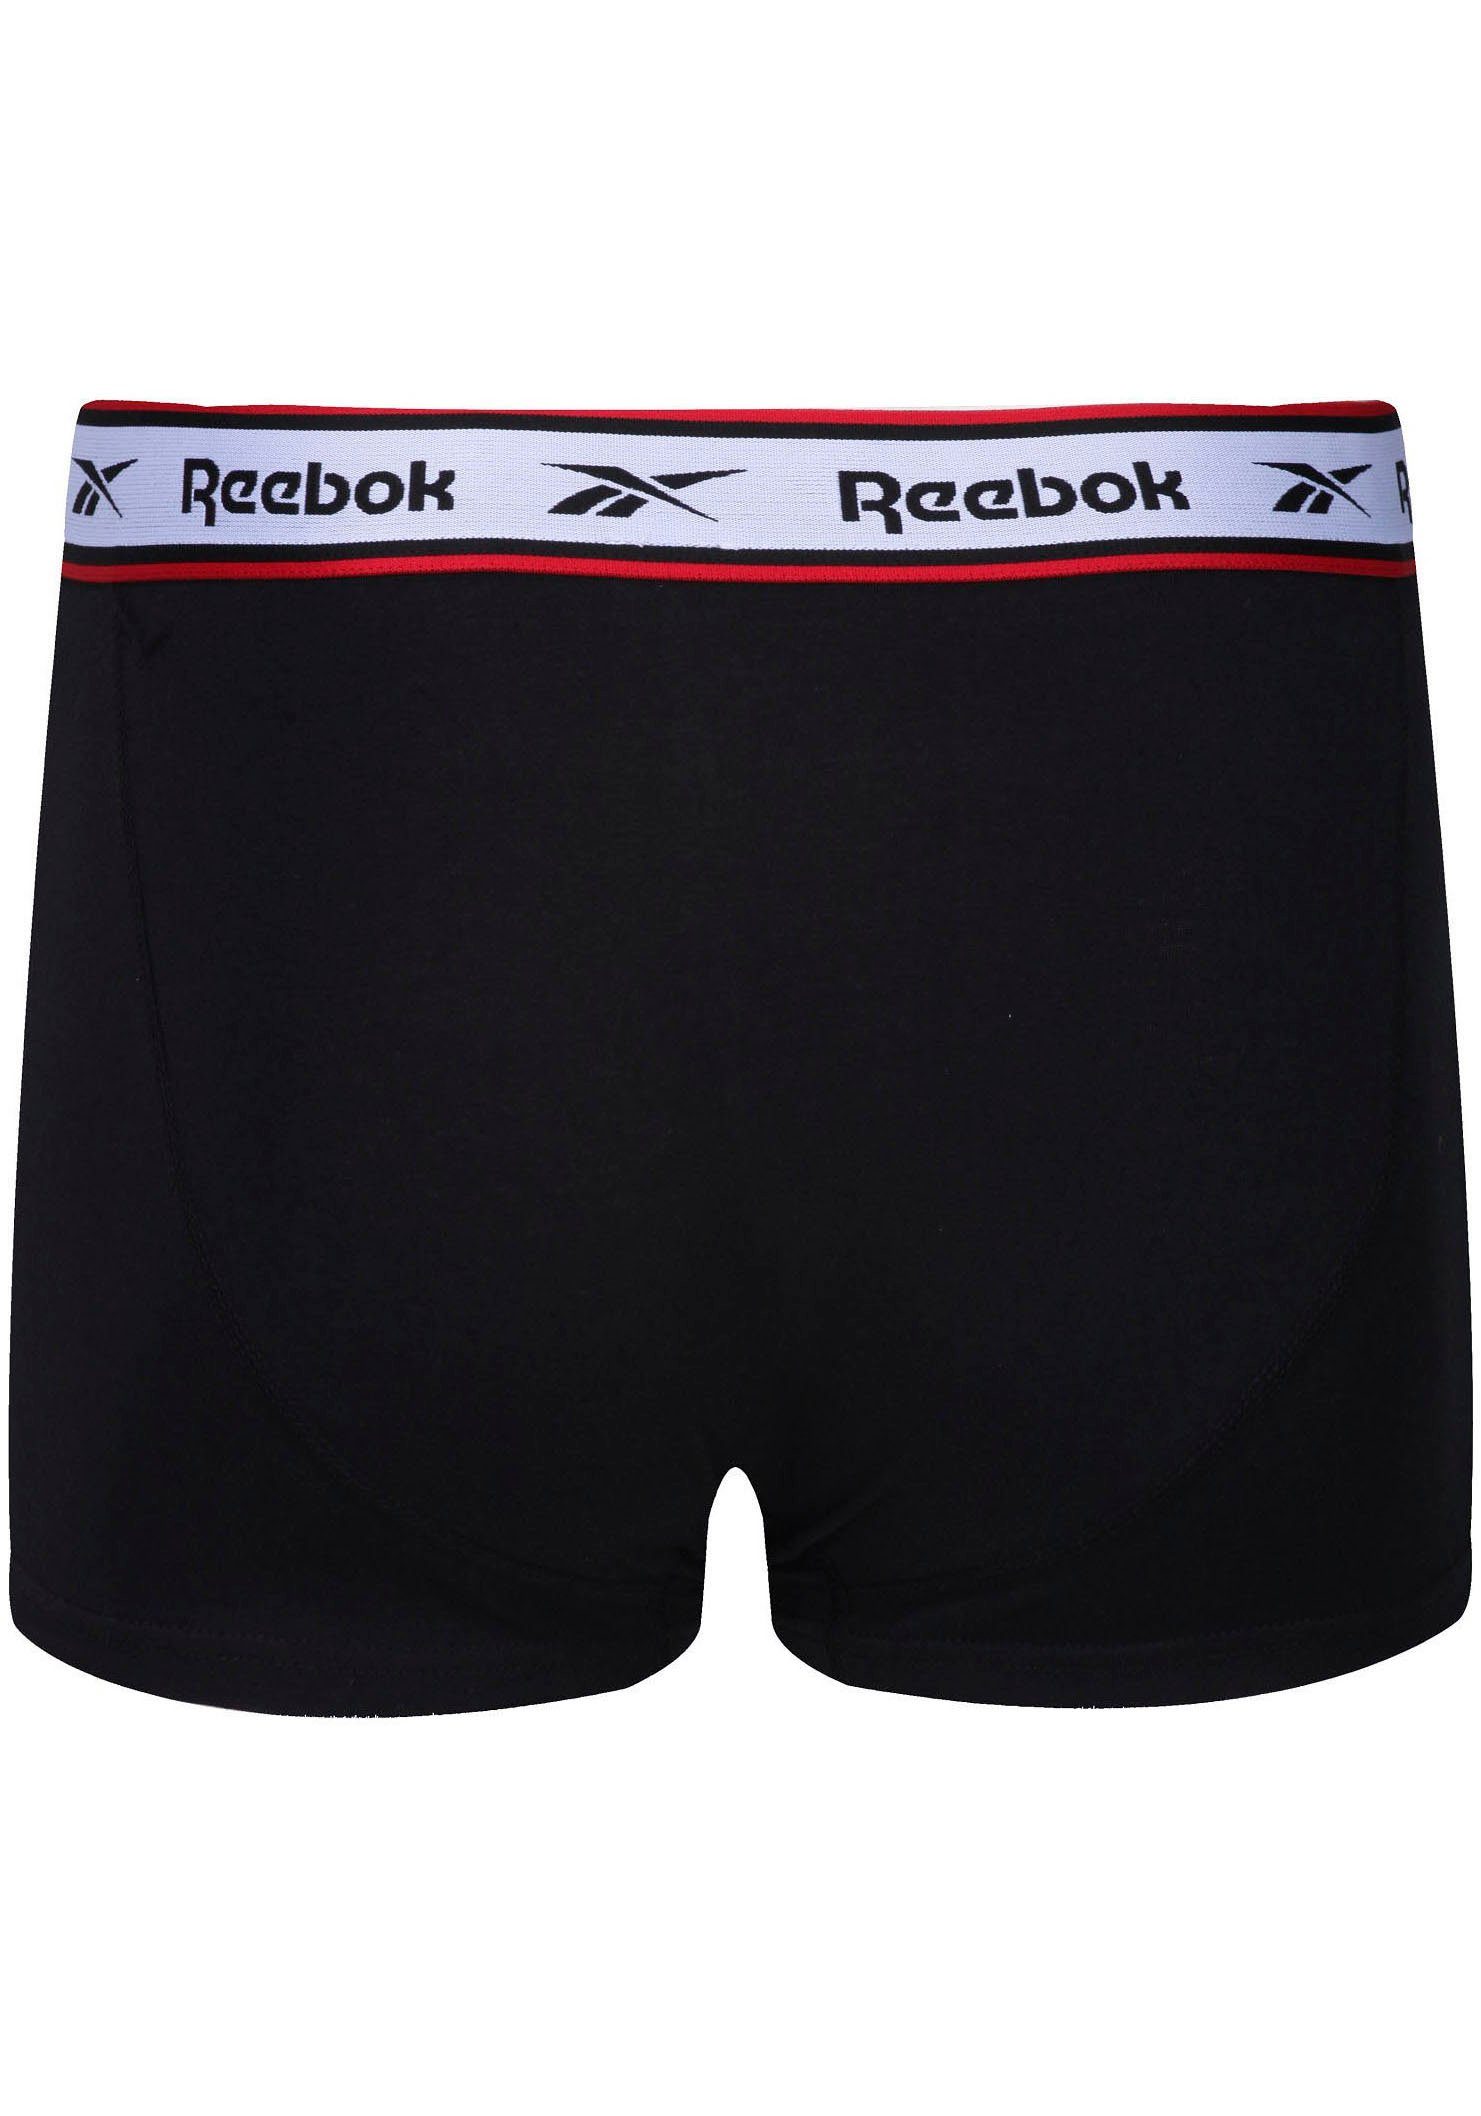 Reebok Trunk BARLOW black/grey 3-St) (Packung, m